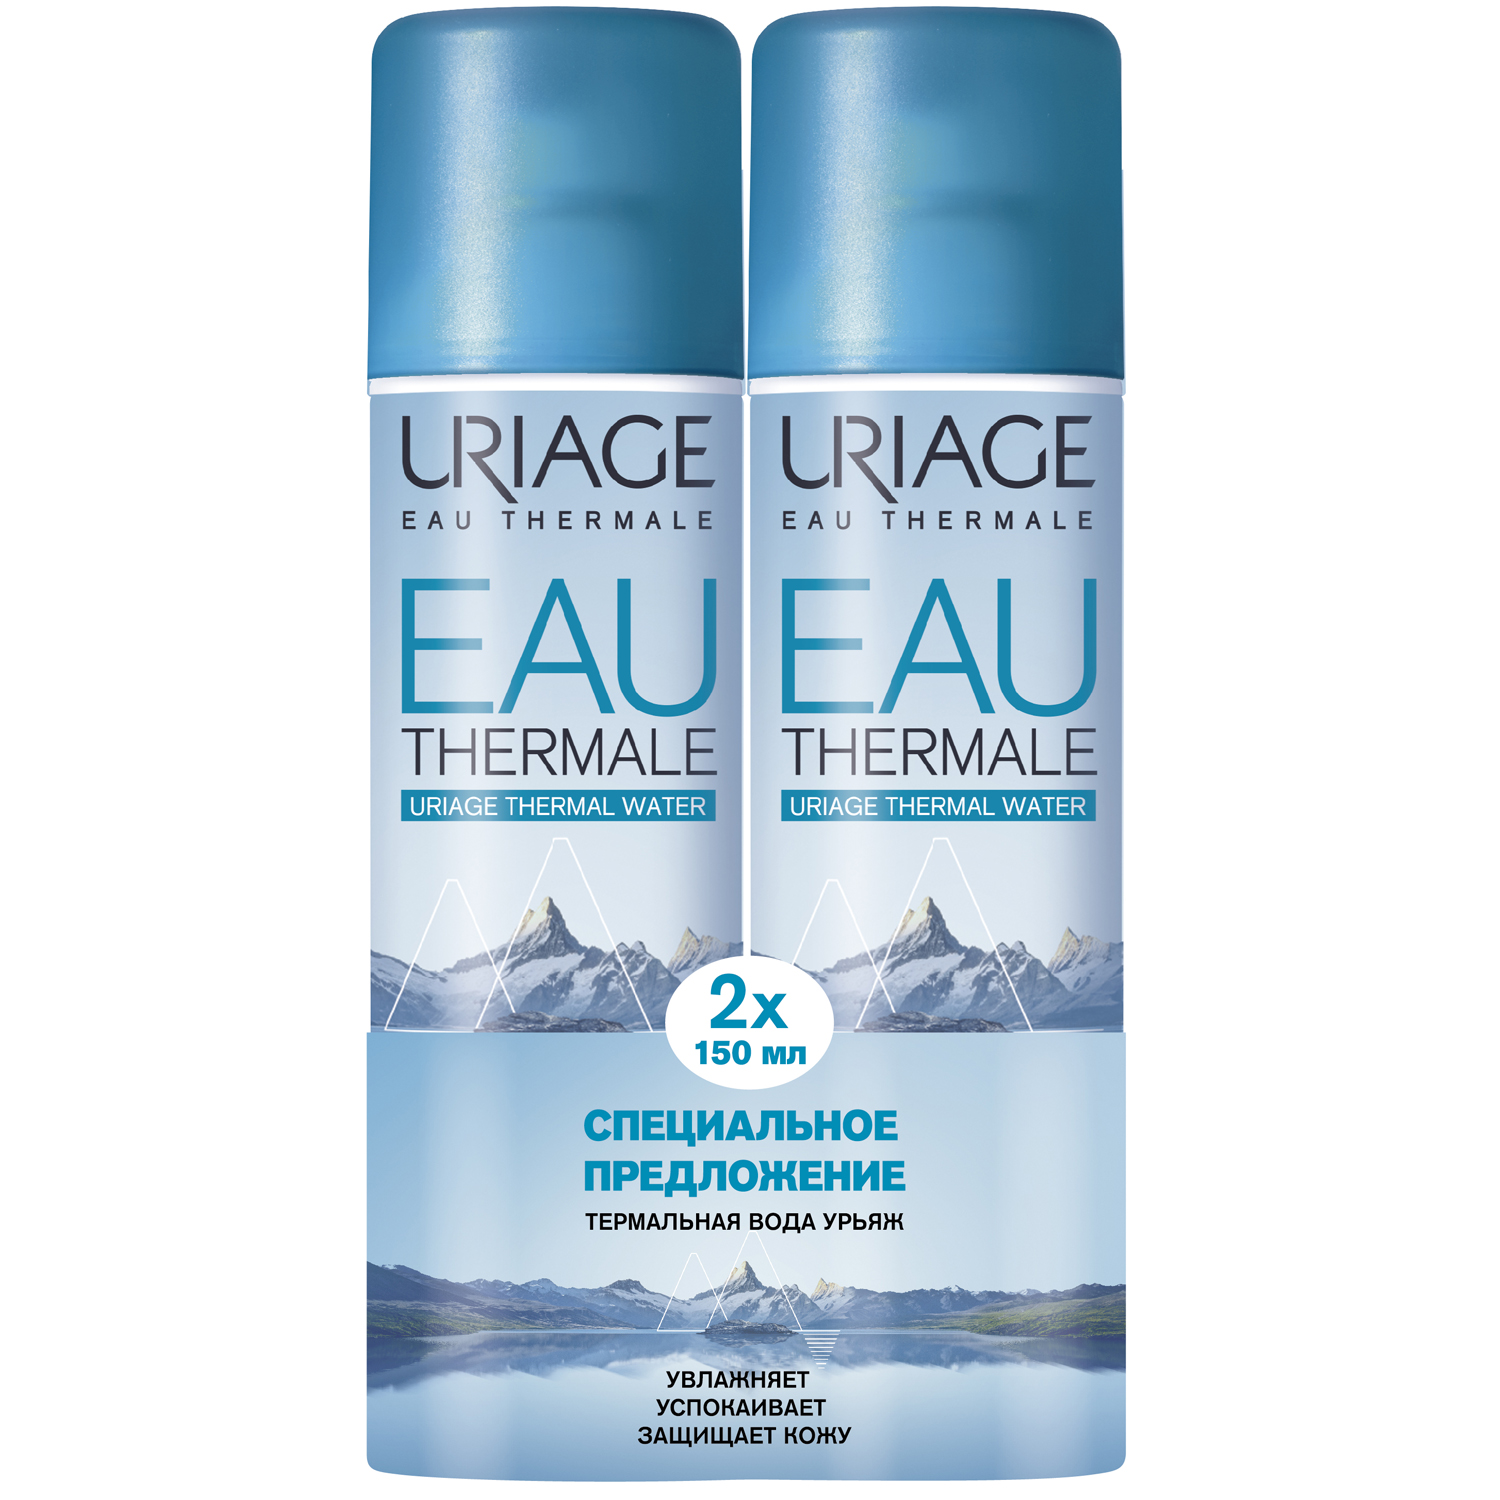 Uriage Термальная вода Урьяж, 2 х 150 мл (Uriage, Eau thermale) uriage термальная вода урьяж 50 мл uriage eau thermale